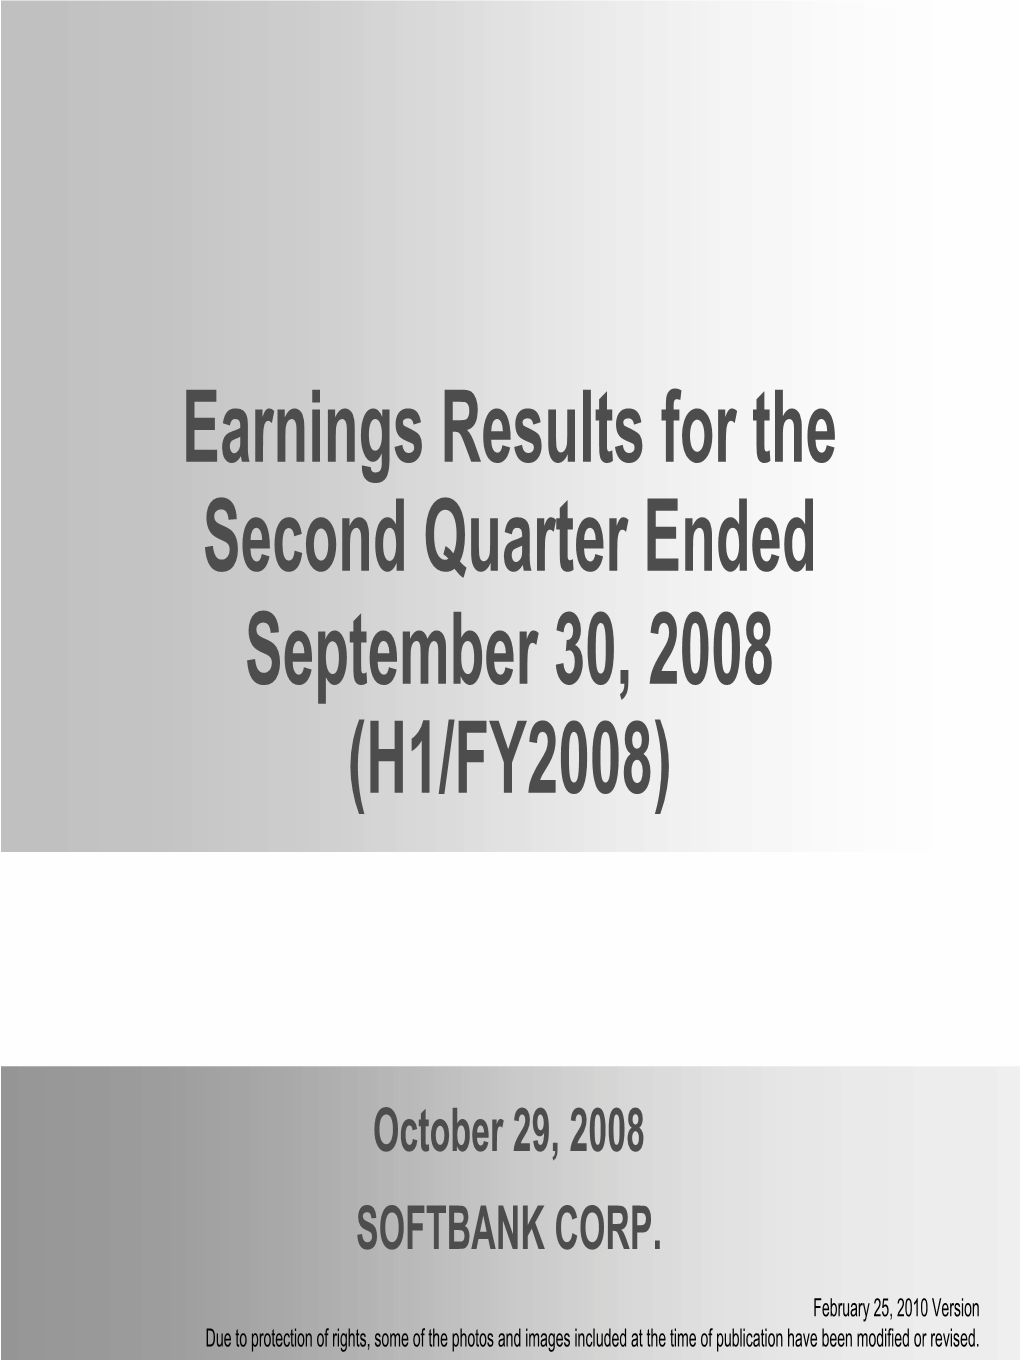 Earnings Results for the Second Quarter Ended September 30, 2008 (H1/FY2008)